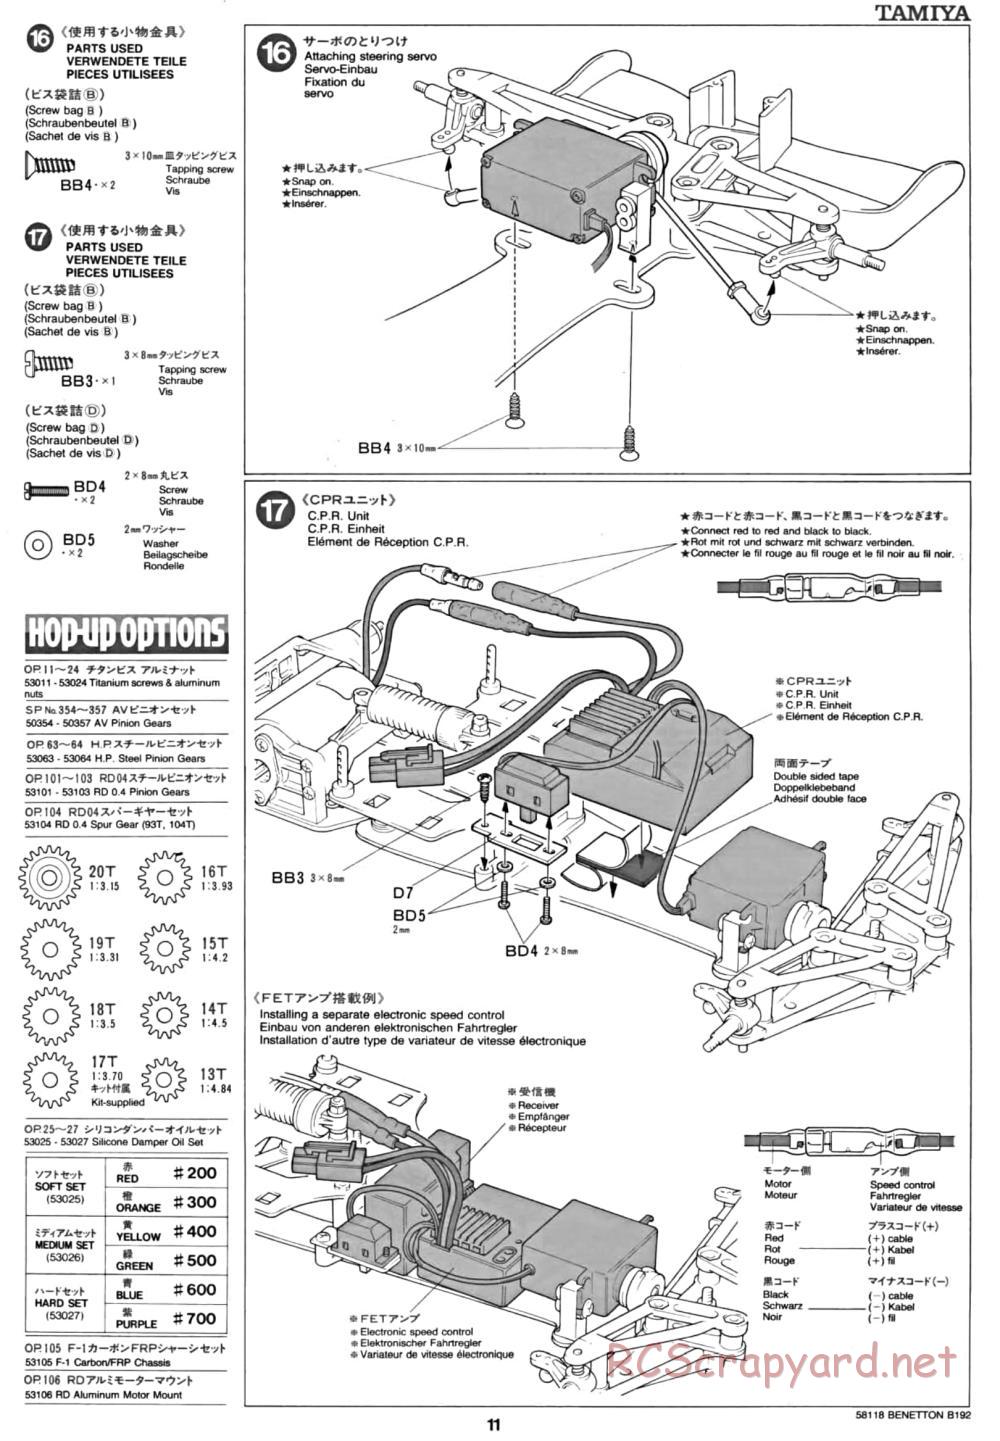 Tamiya - Benetton B192 - F102 Chassis - Manual - Page 11